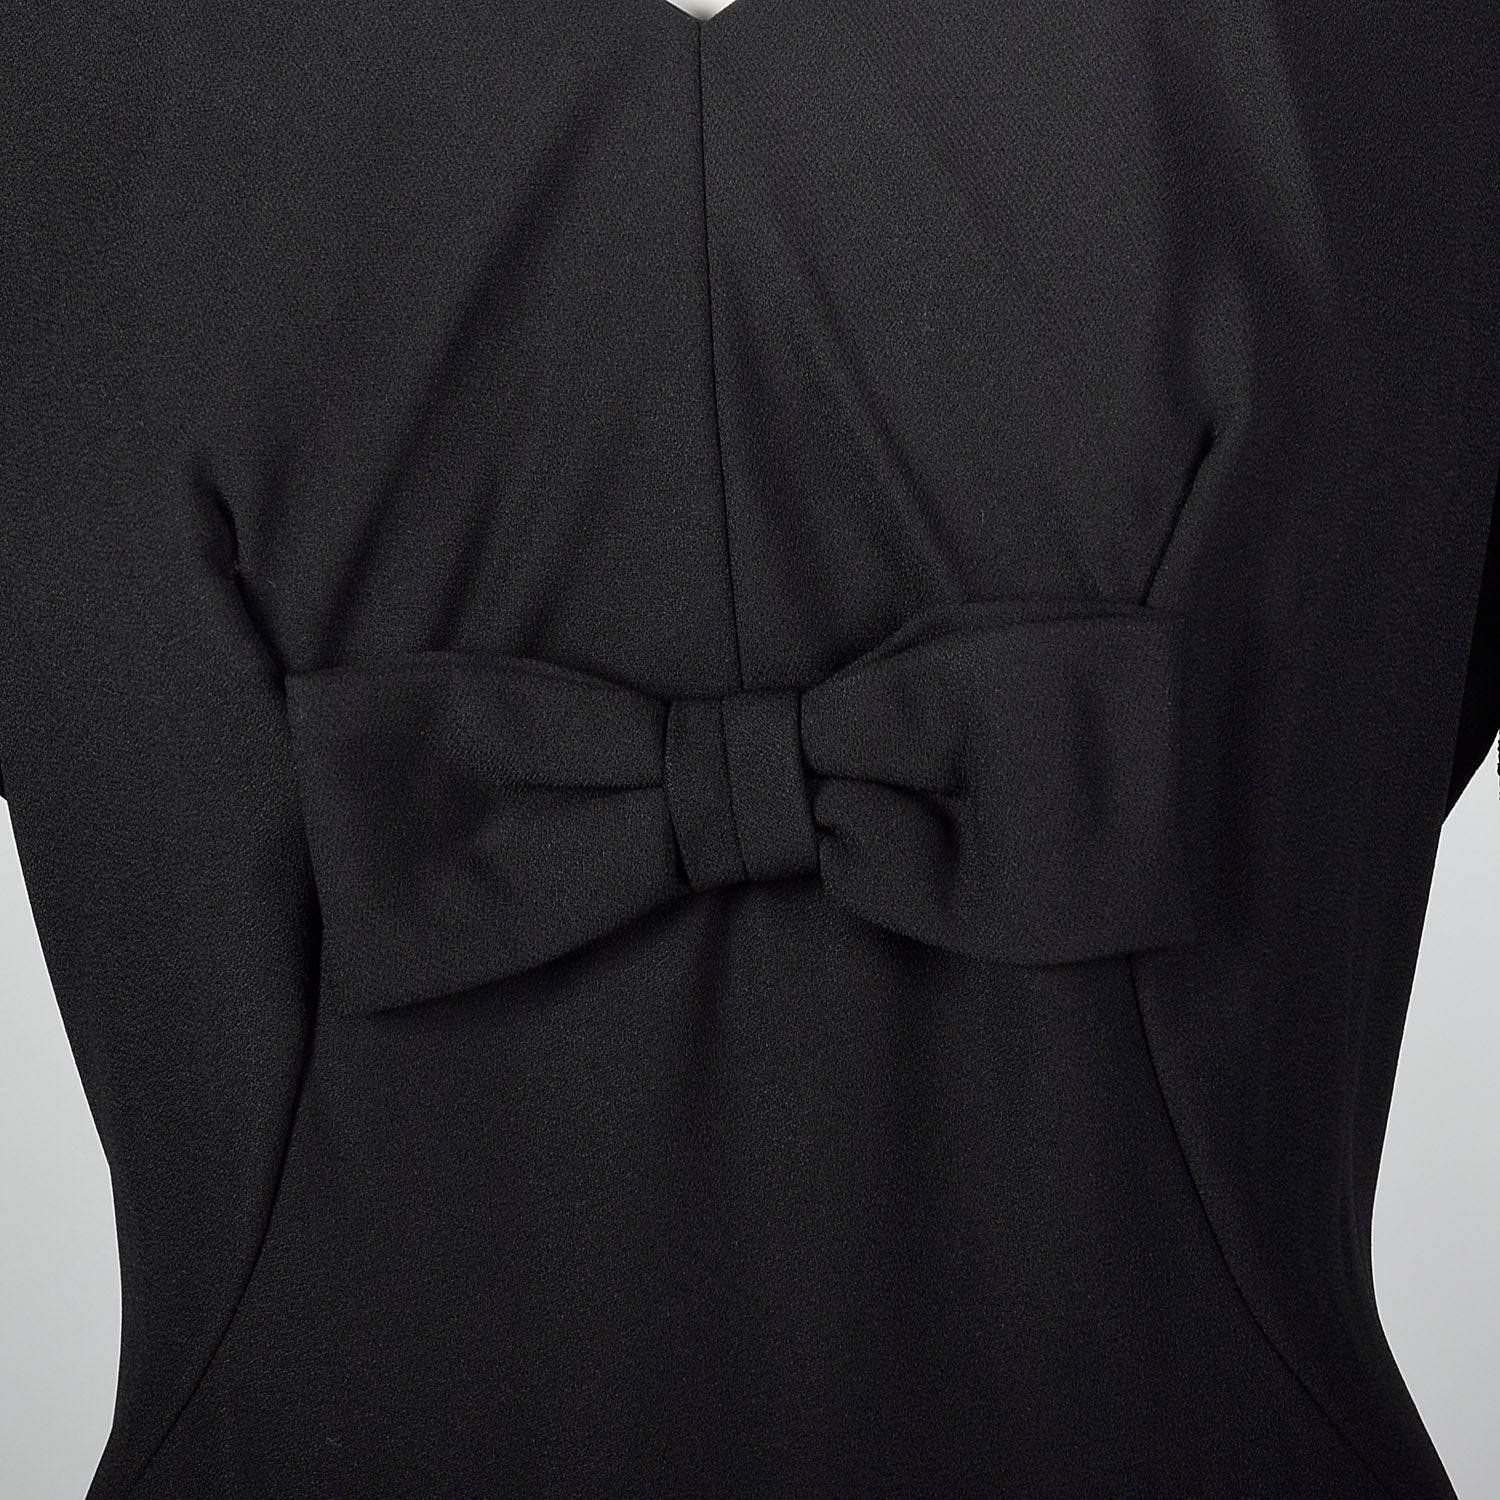 1960s Black Lace Sleeve Shift Dress